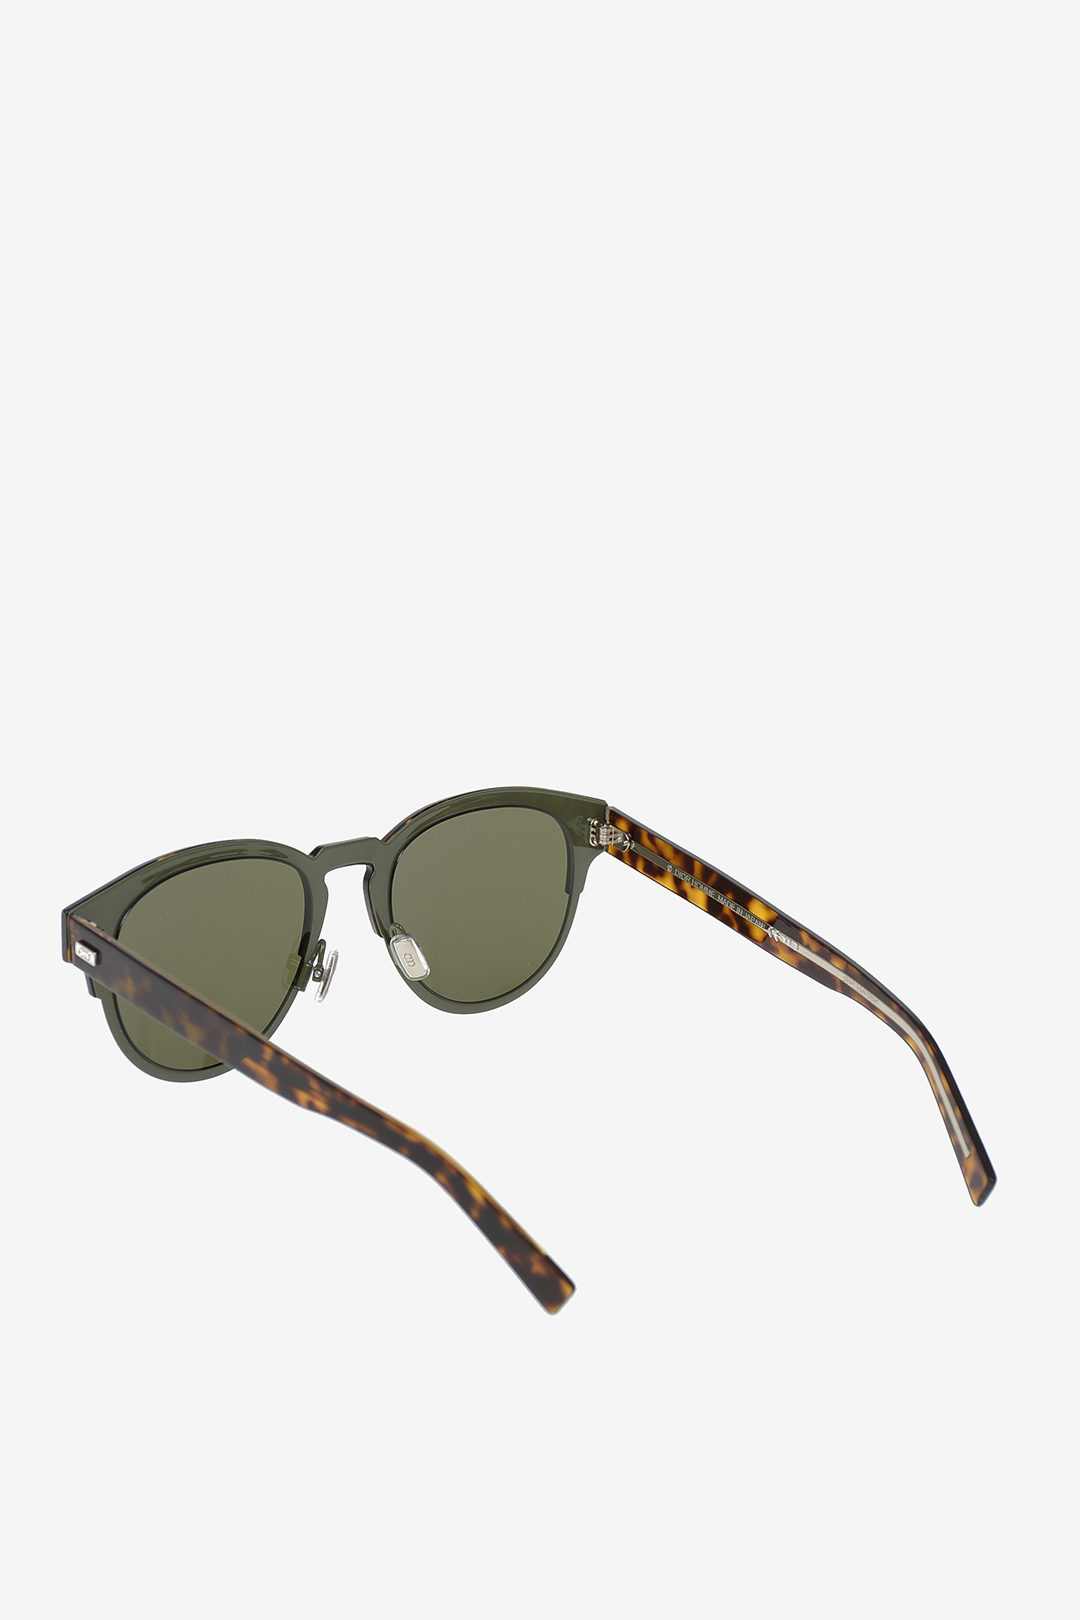 Dior Wayfarer BLACKTIE2.0S Sunglasses 